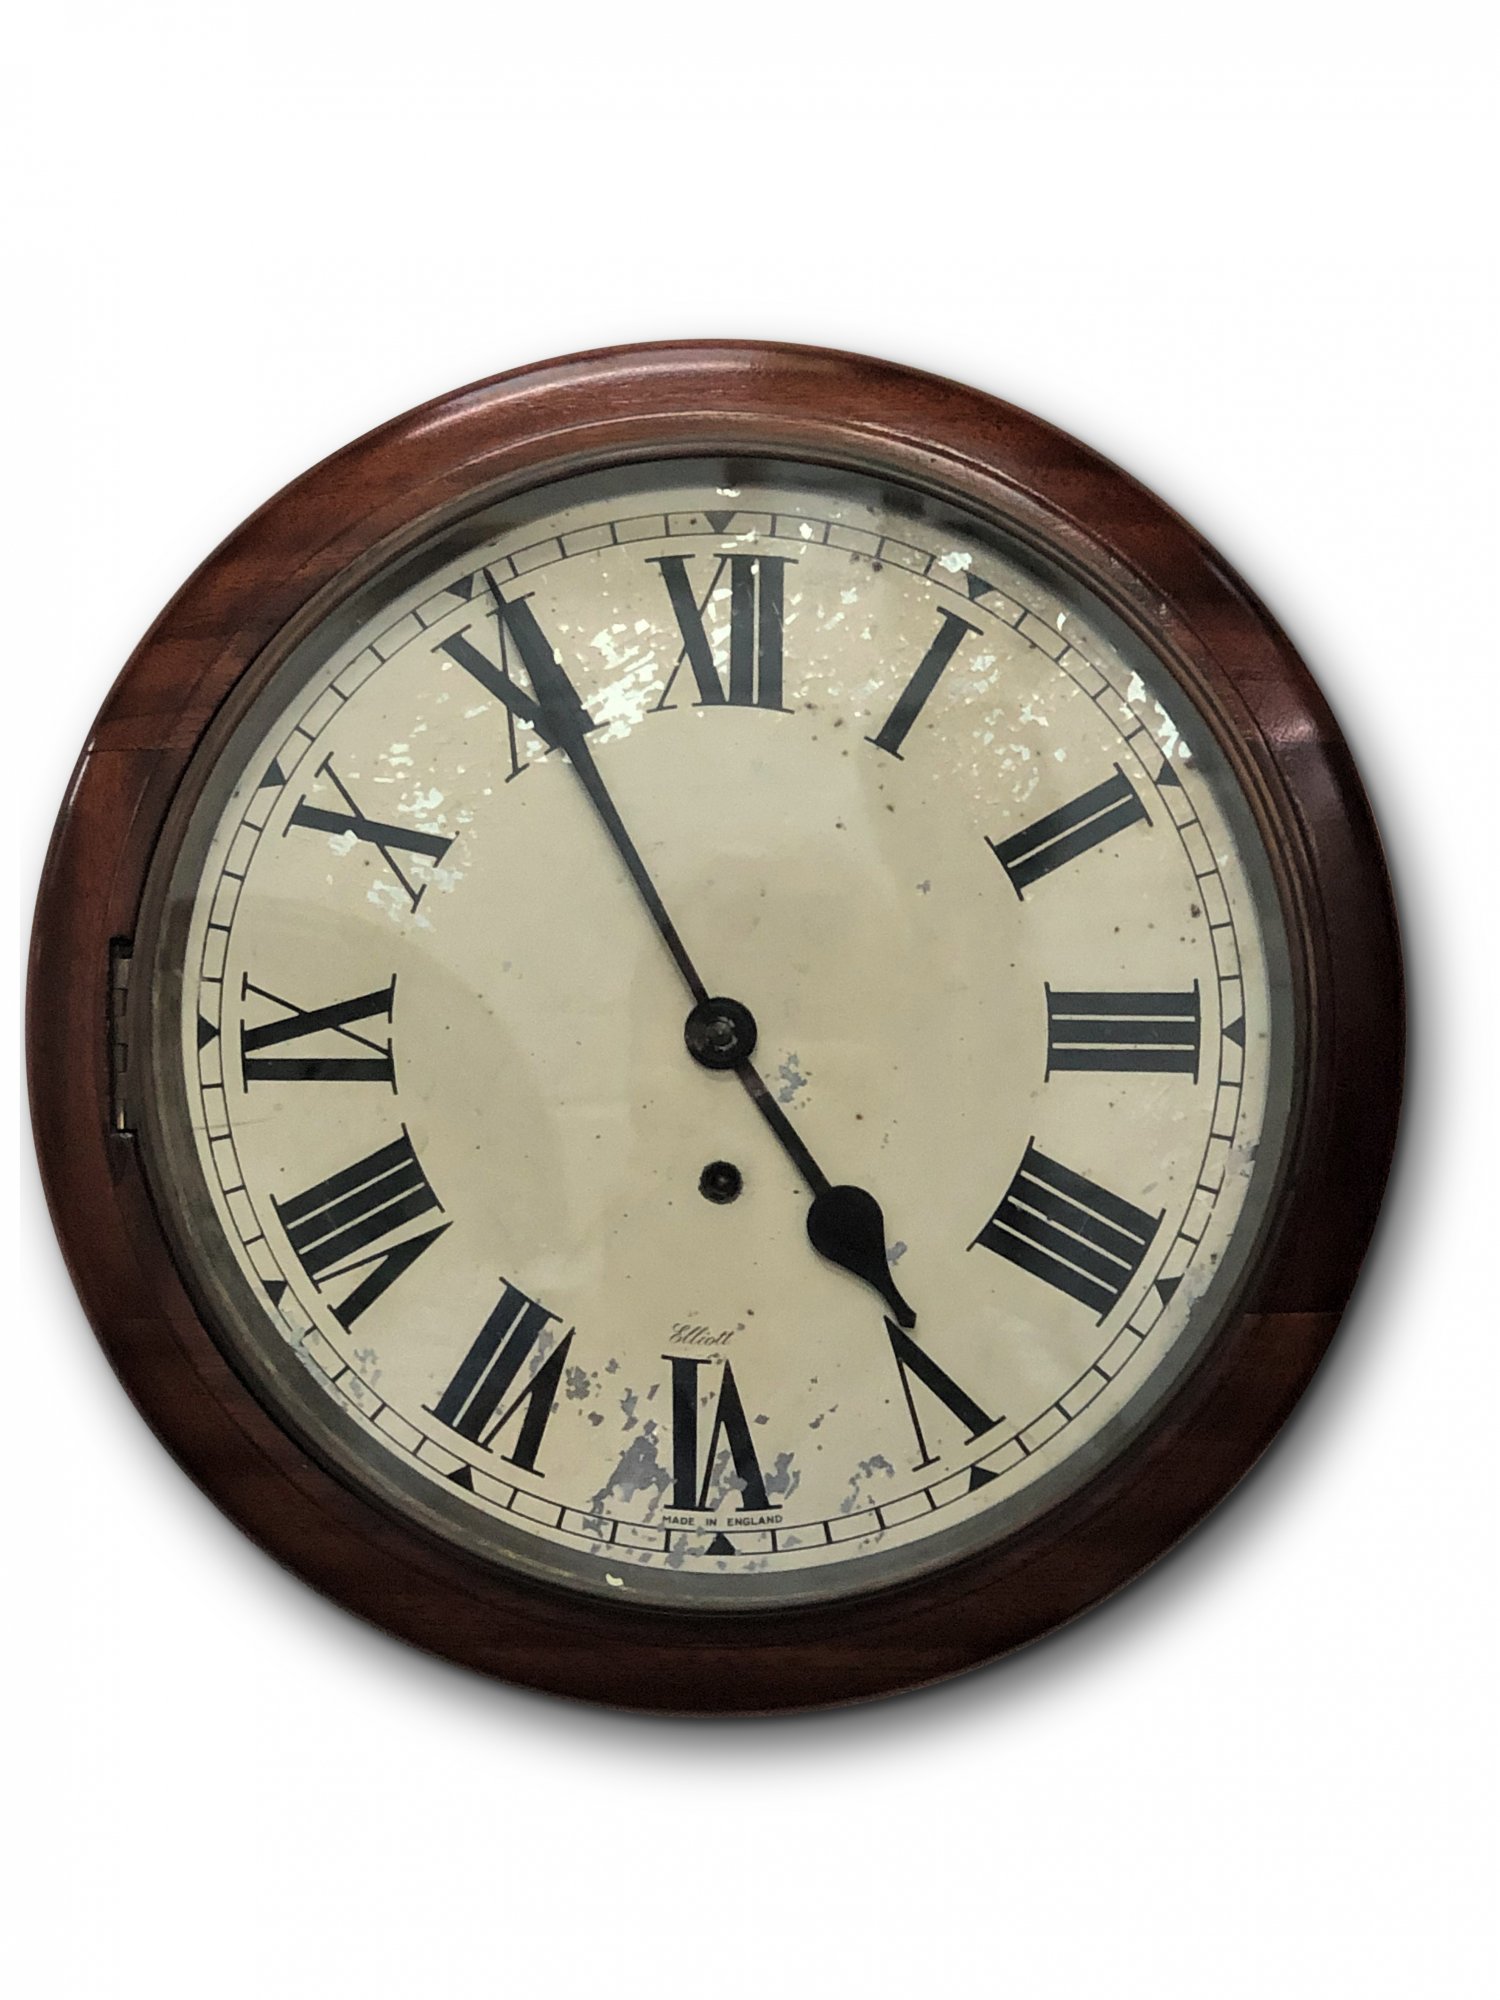 Victorian mahogany railway clock by Elliott, with 8-day movement